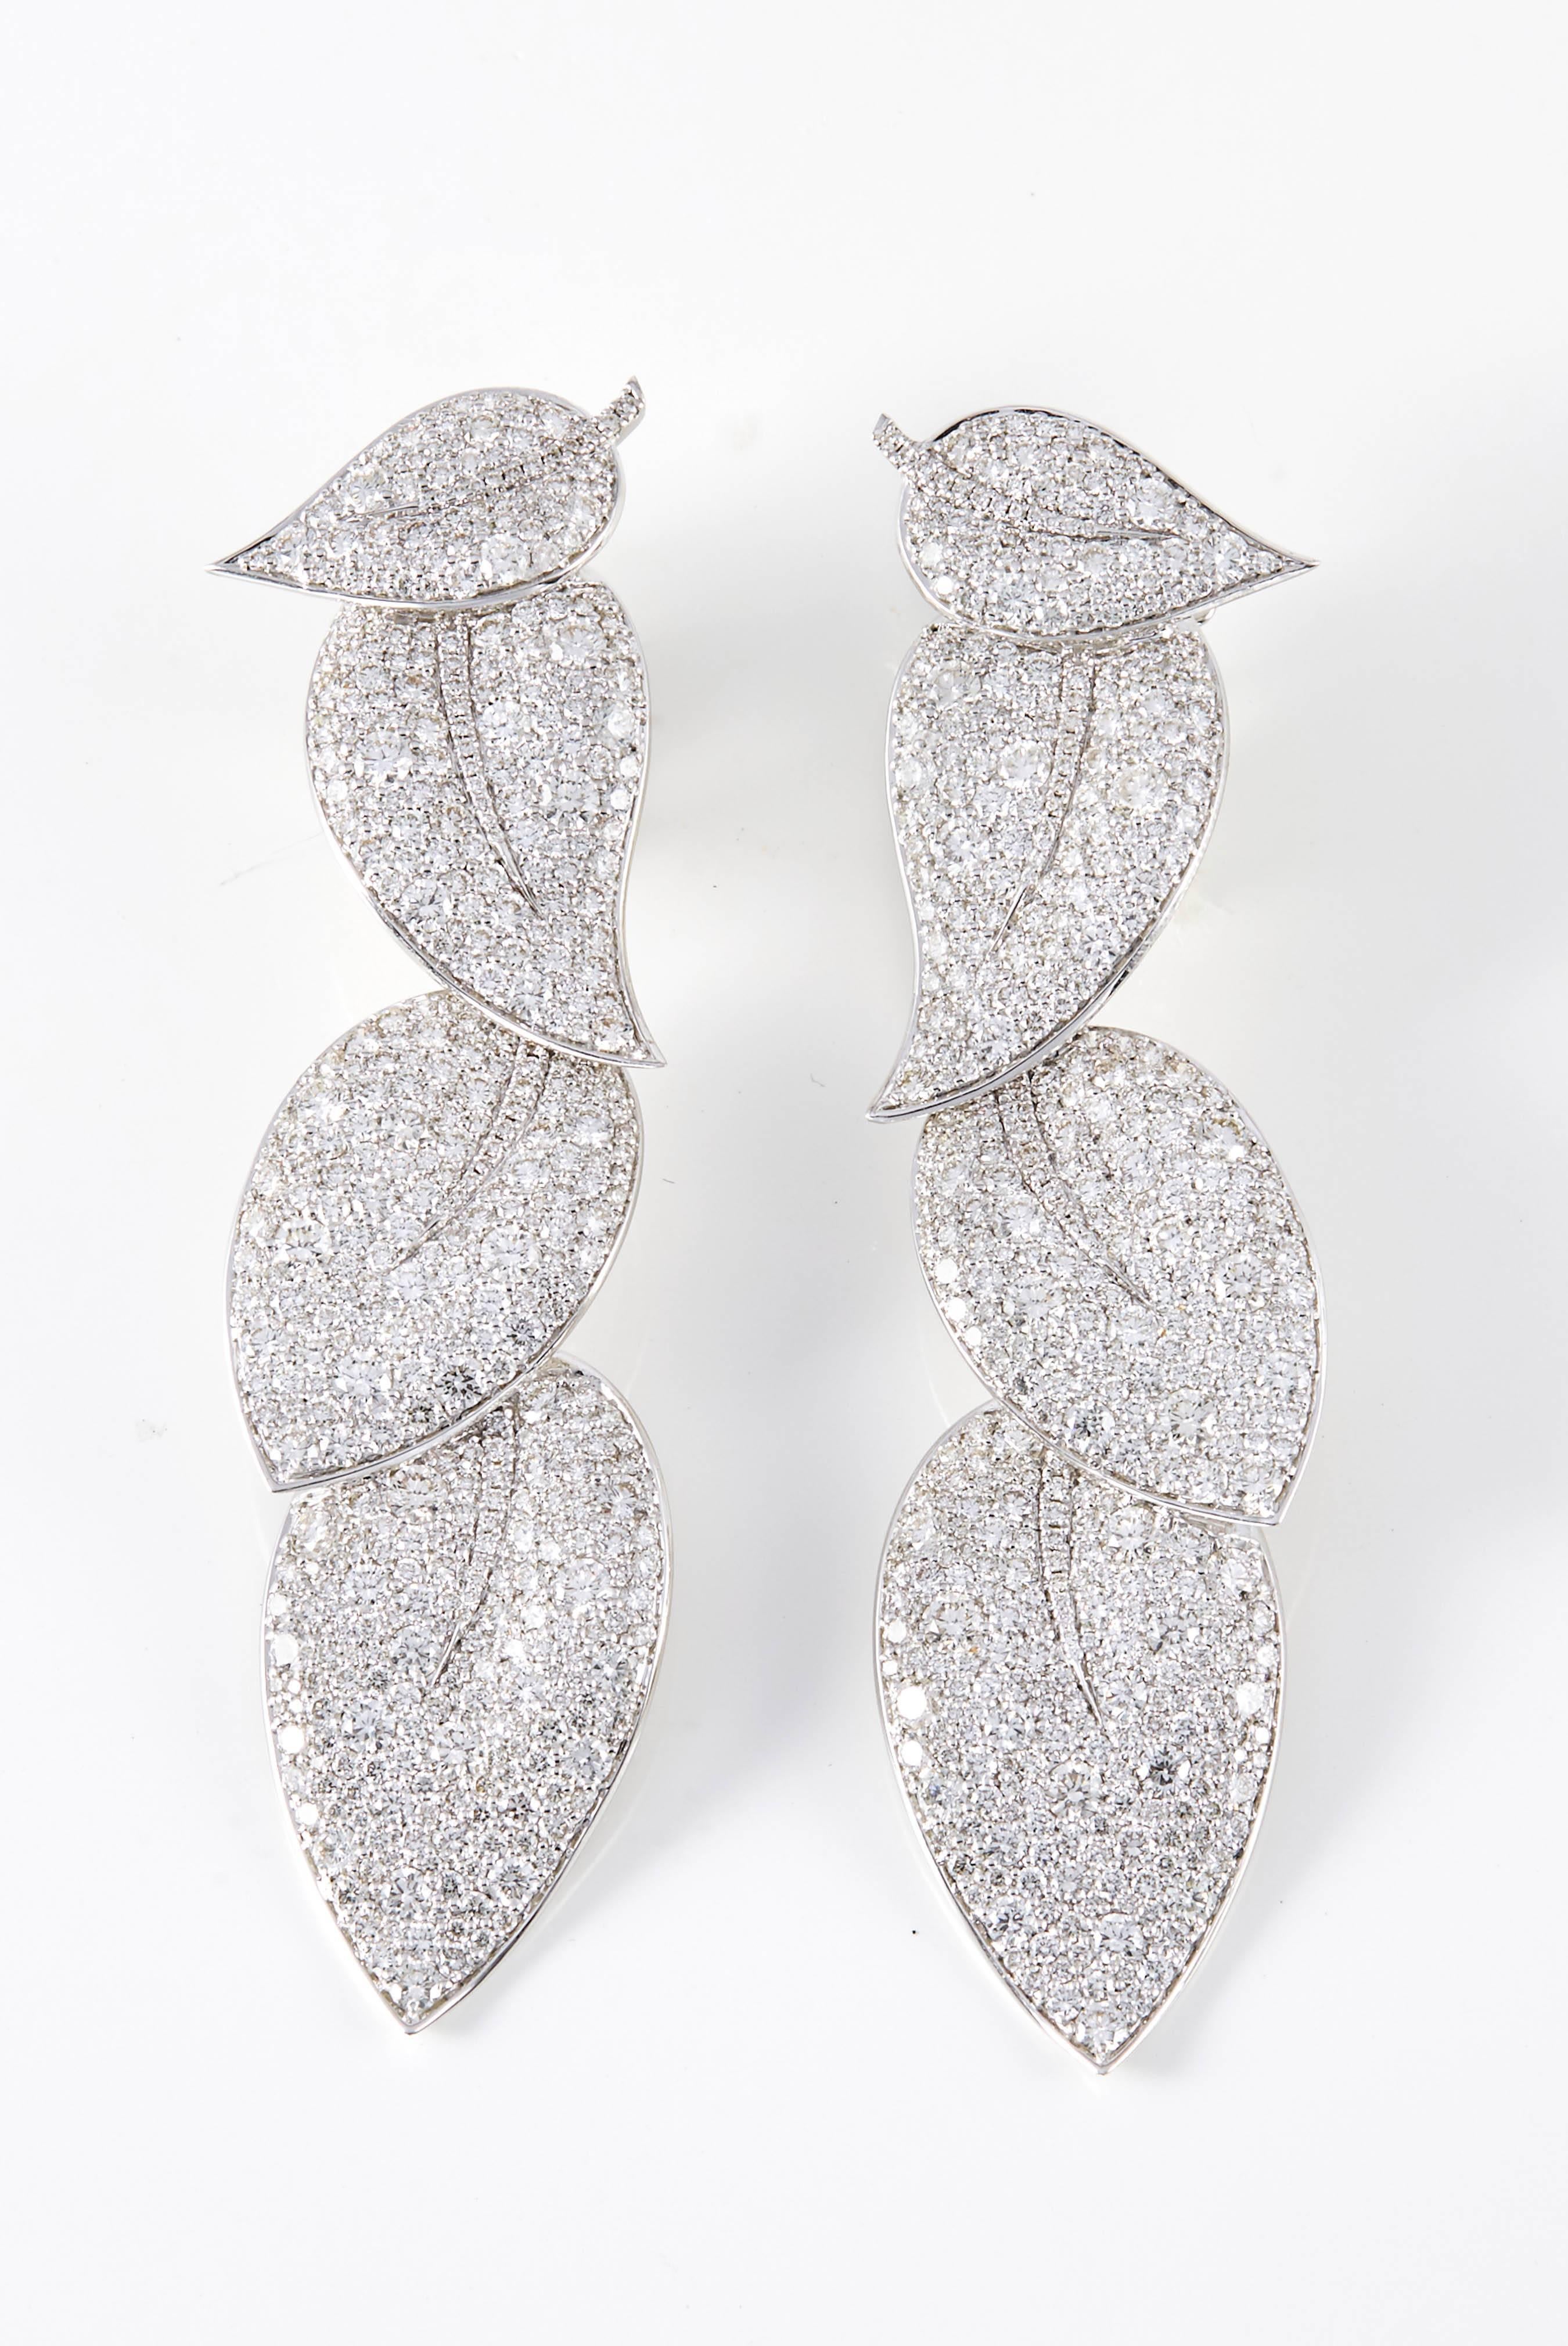 SAM.SAAB Leaf Motif Diamond and White Gold Earring For Sale 1